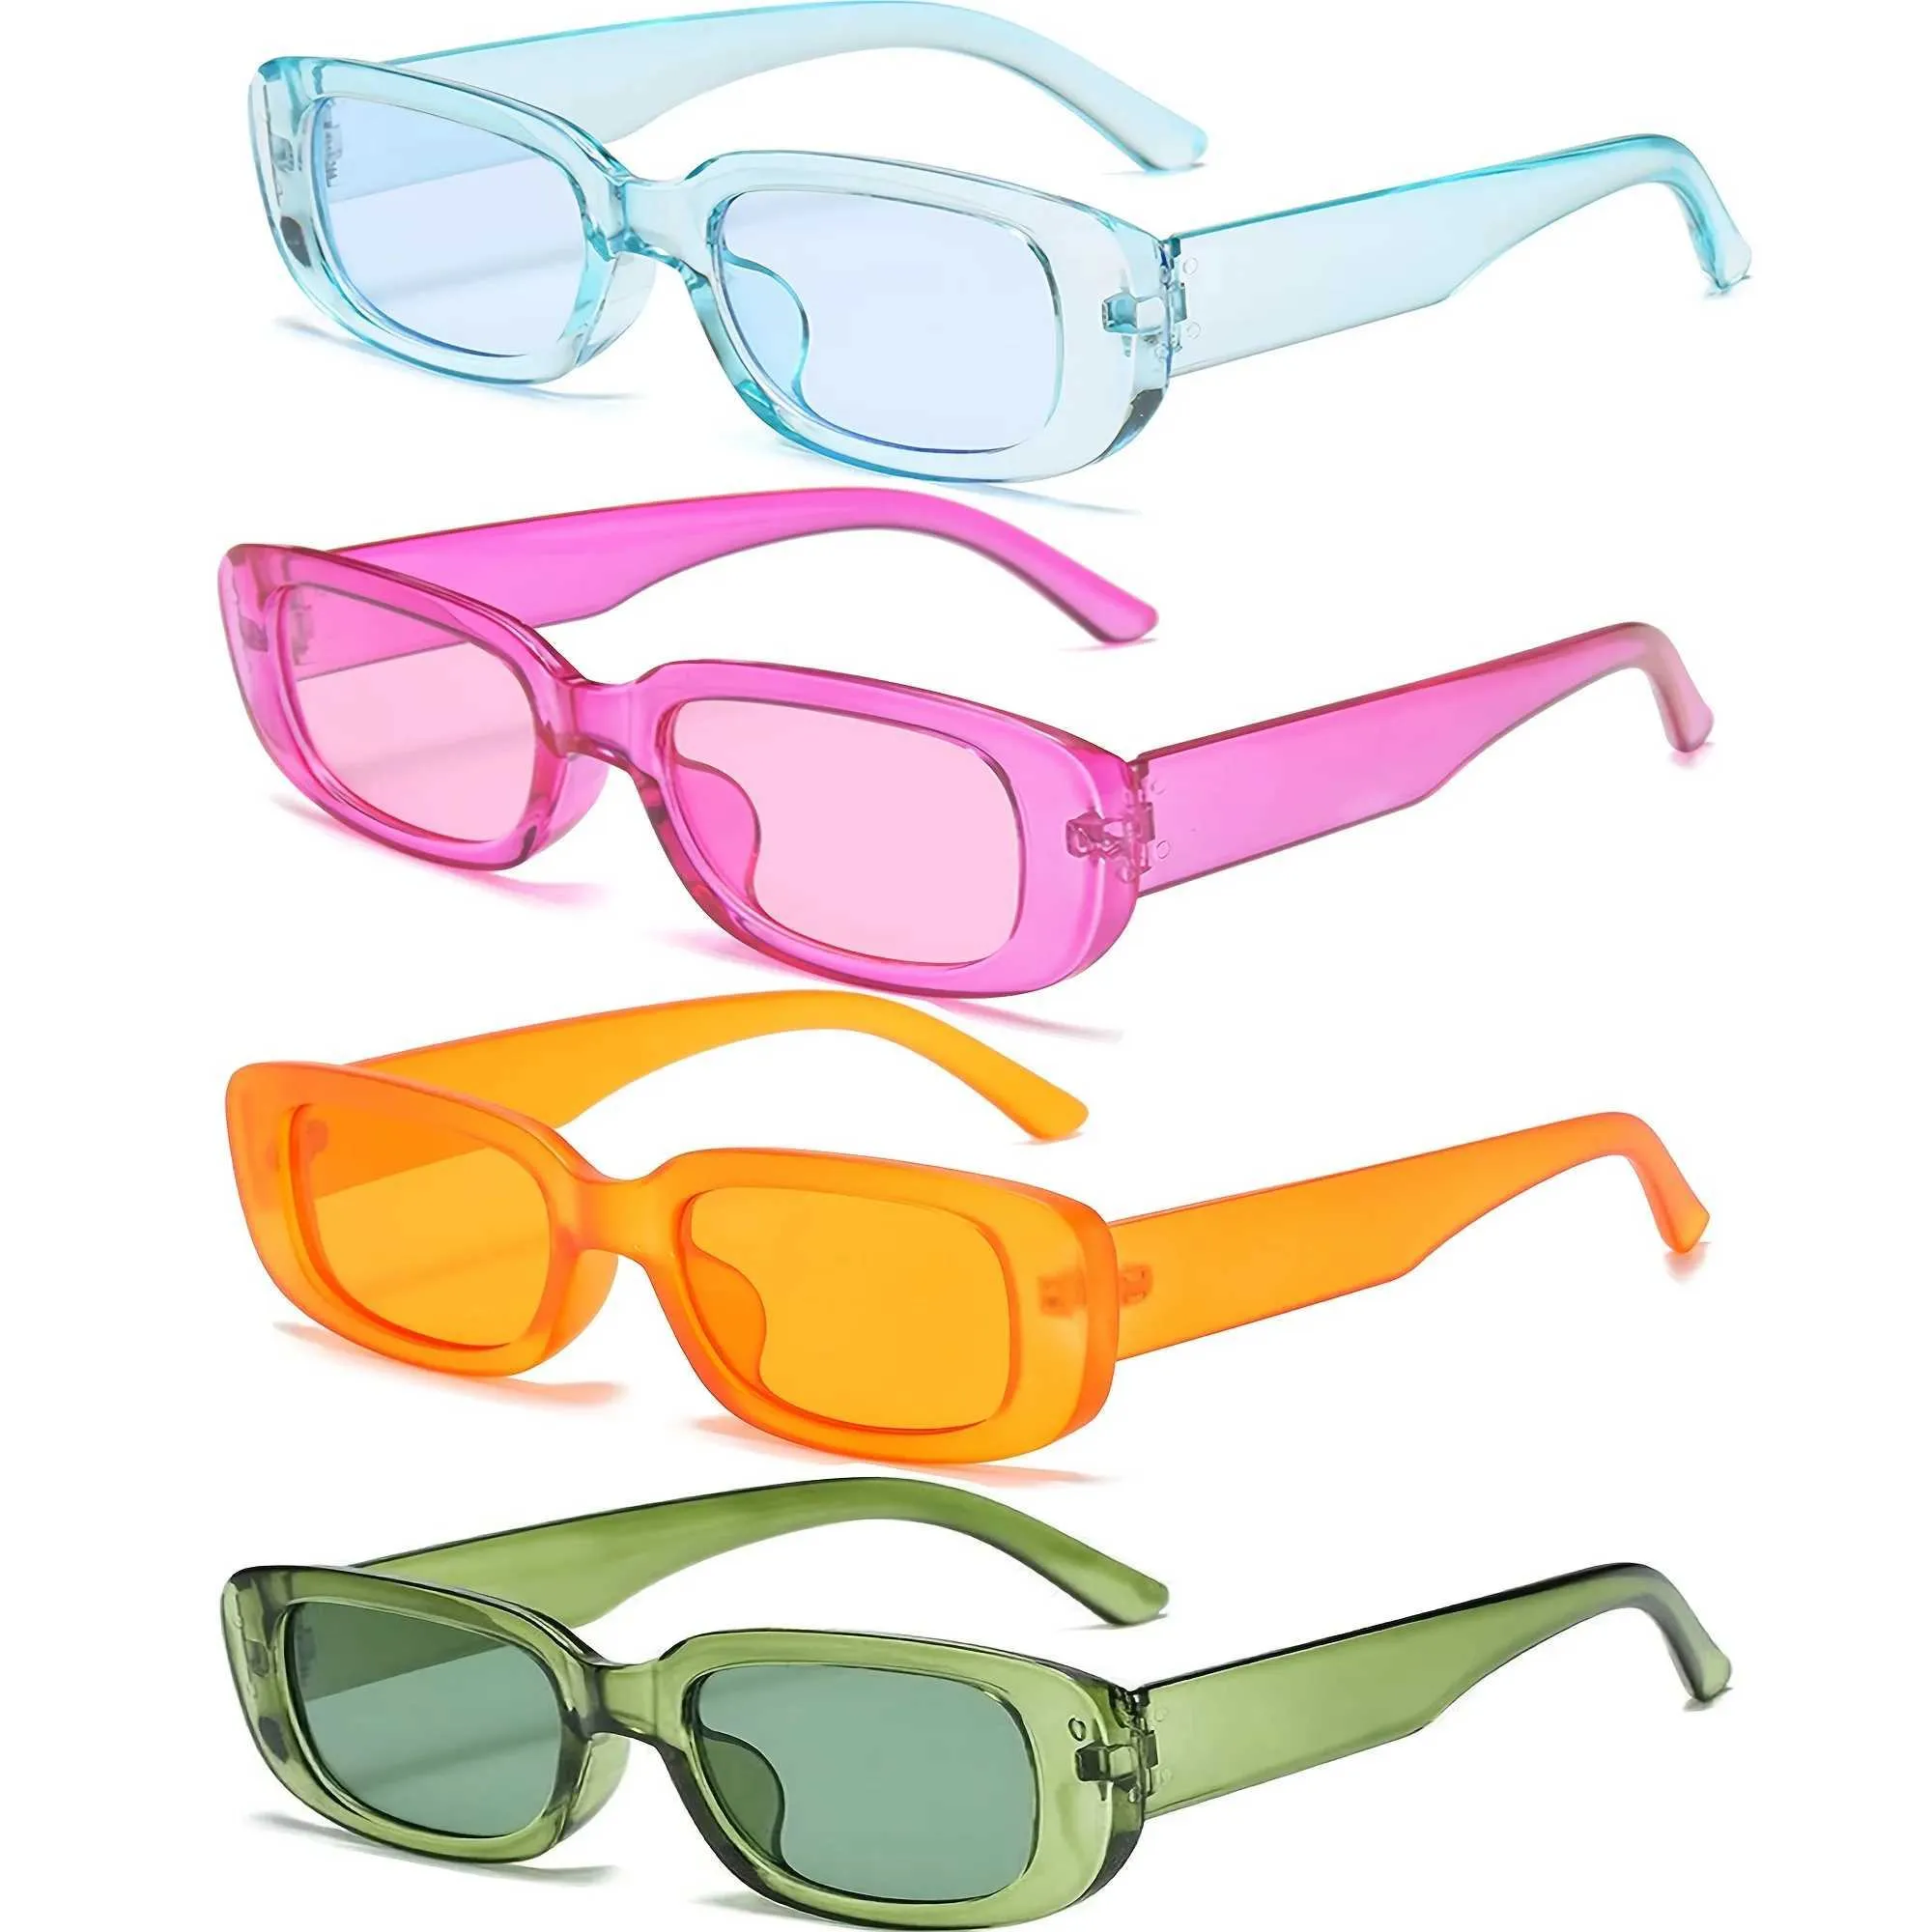 Óculos de sol 4pcs/conjunto de óculos de sol retangulares adequados para mulheres homens podem ser coloridos y2k óculos de sol da moda vintage Óculos ao ar livre uv400 j240423